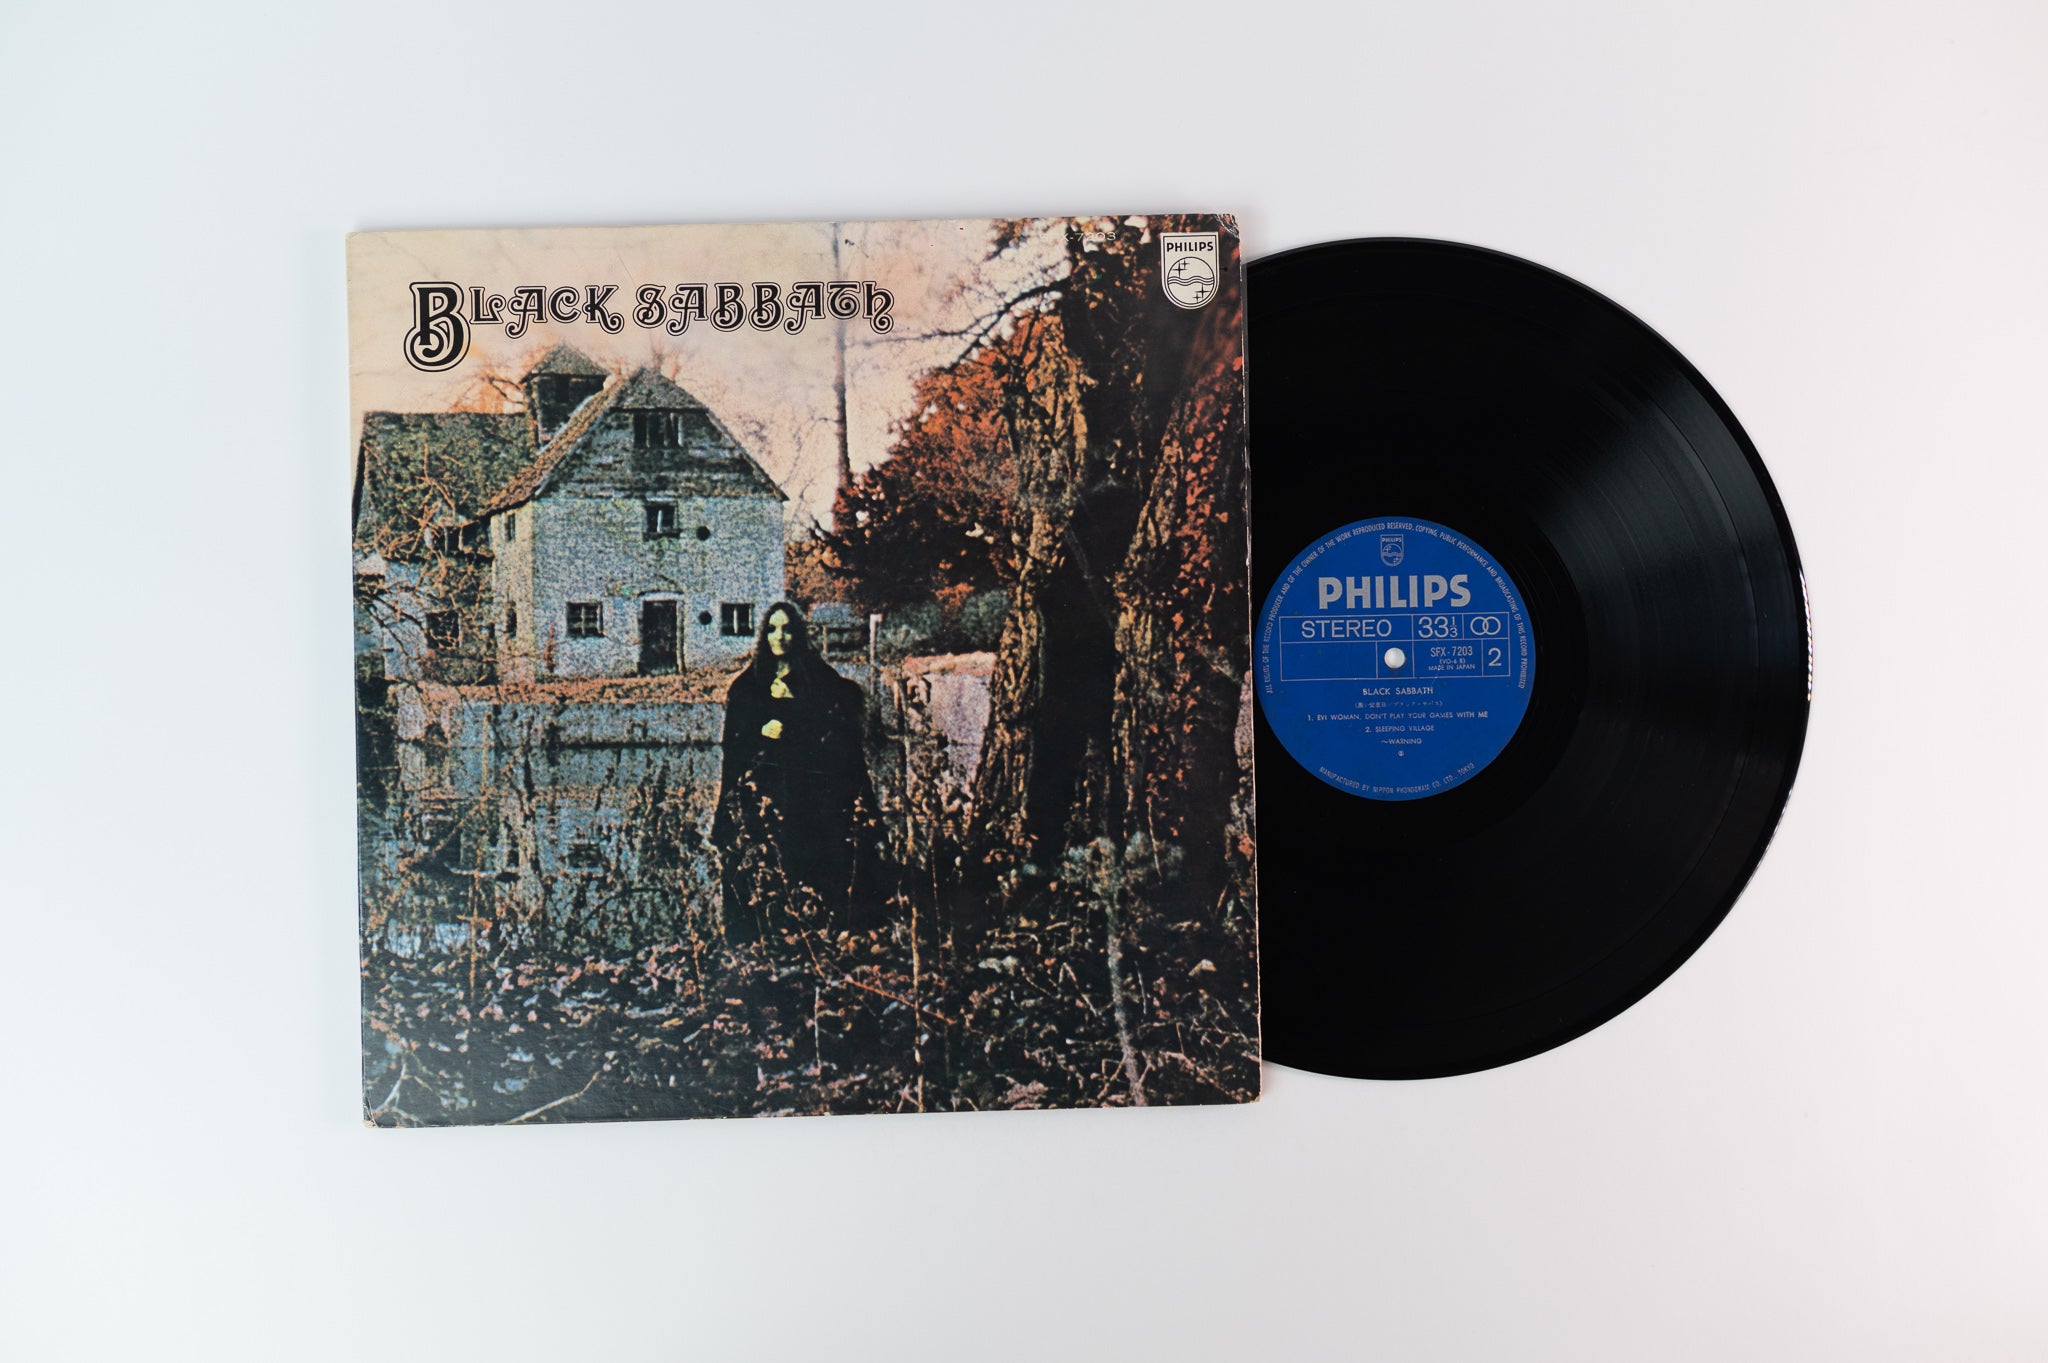 Black Sabbath - Black Sabbath on Philips 1970 Japanese Pressing